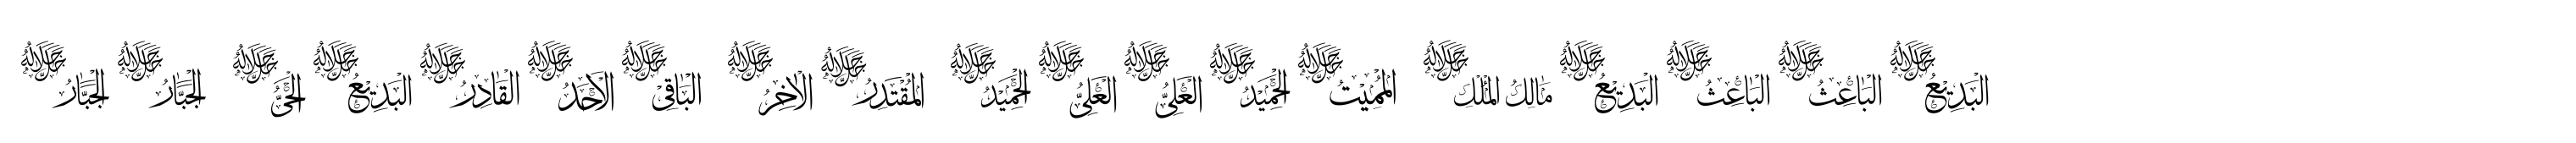 99 Names of ALLAH Jalla